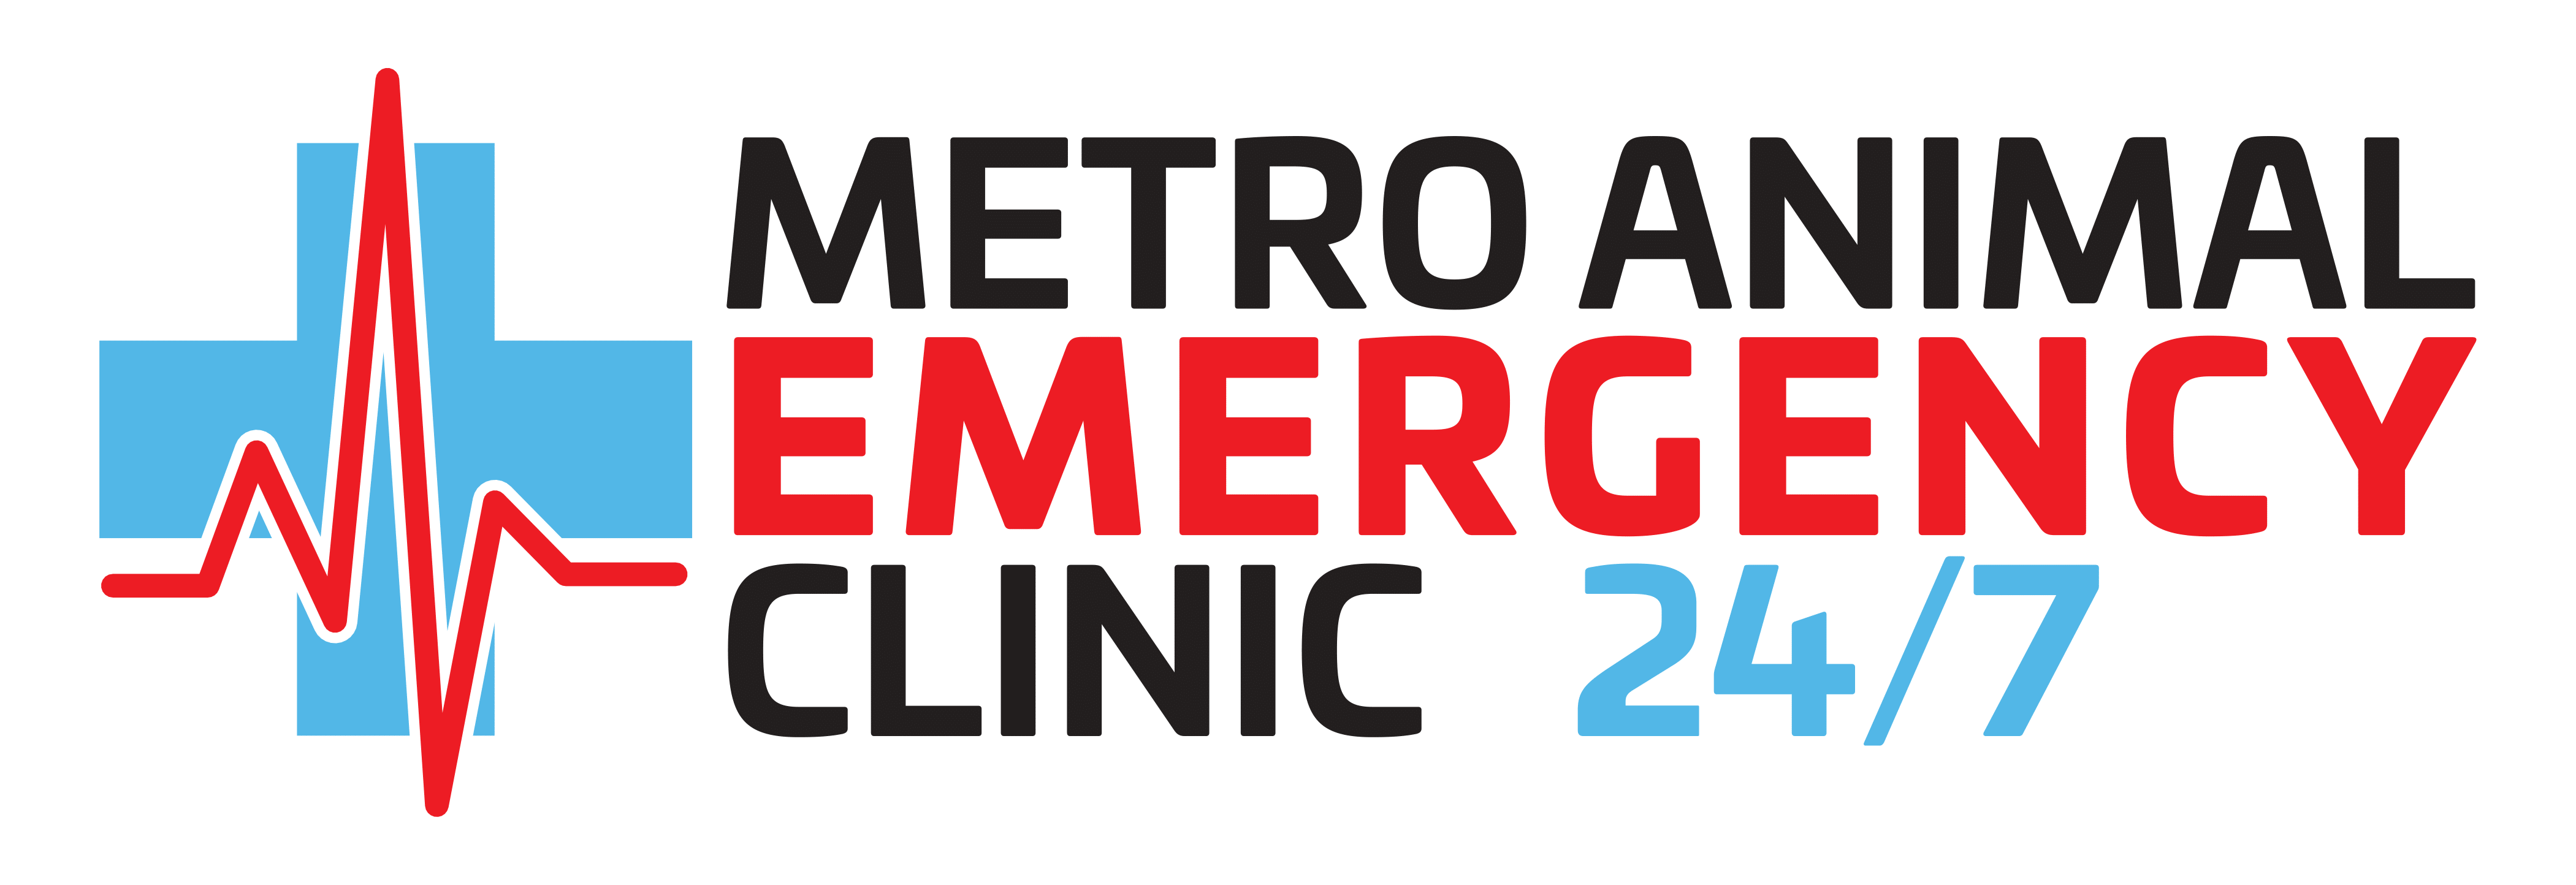 Metro Animal Emergency Clinic